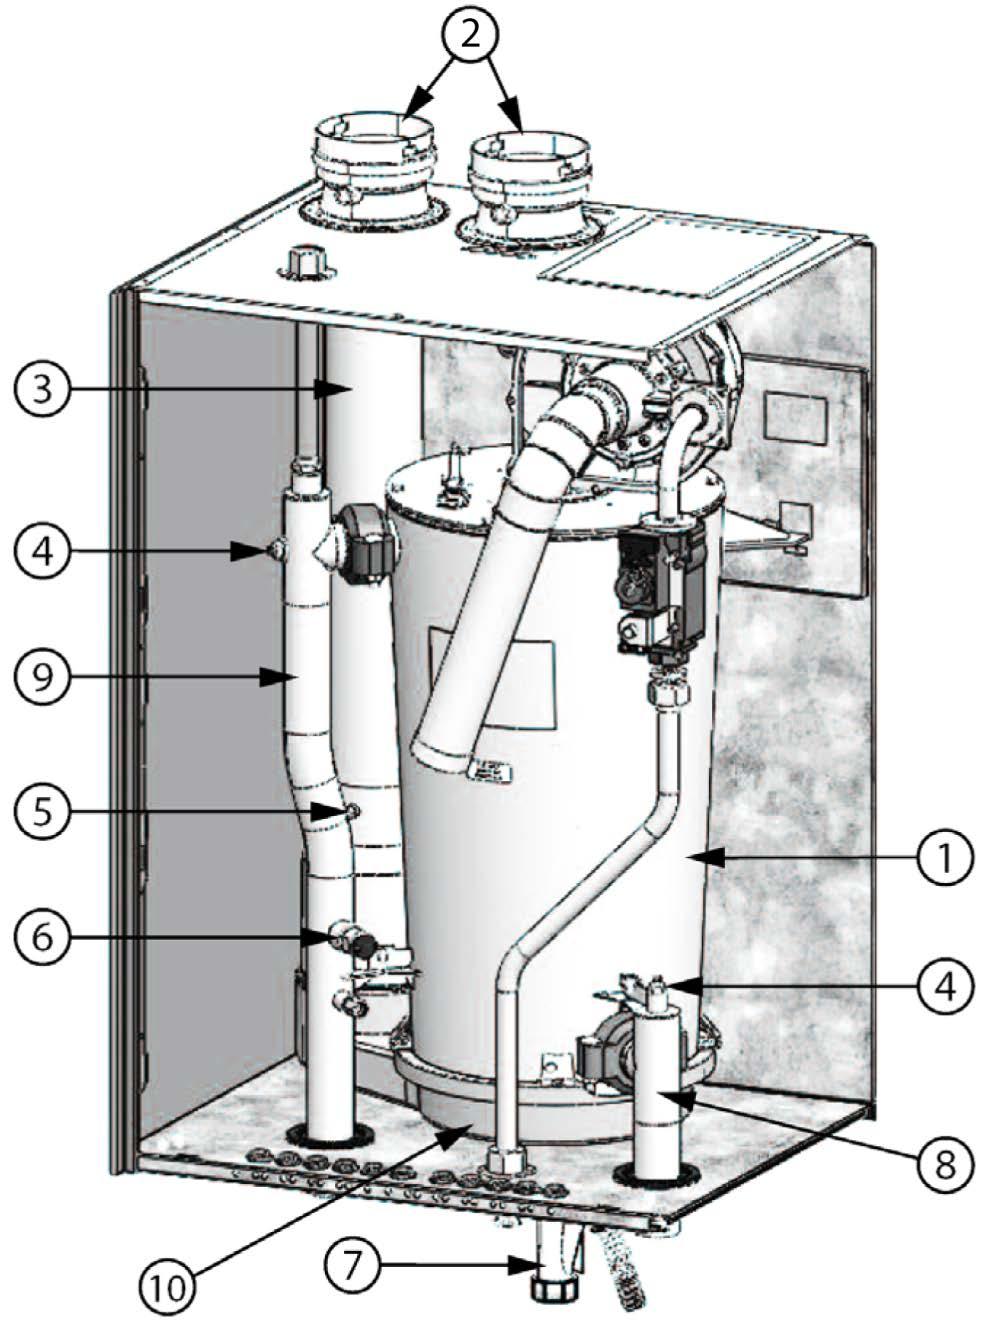 GF-135 Esteem 399 Low NOx Boiler Appendix A OMM-0089_0A Installation, Operation & Maintenance Manual Parts & Dimensions Figure A-2: Esteem 399 Internal Components Item# Part Number Description 1